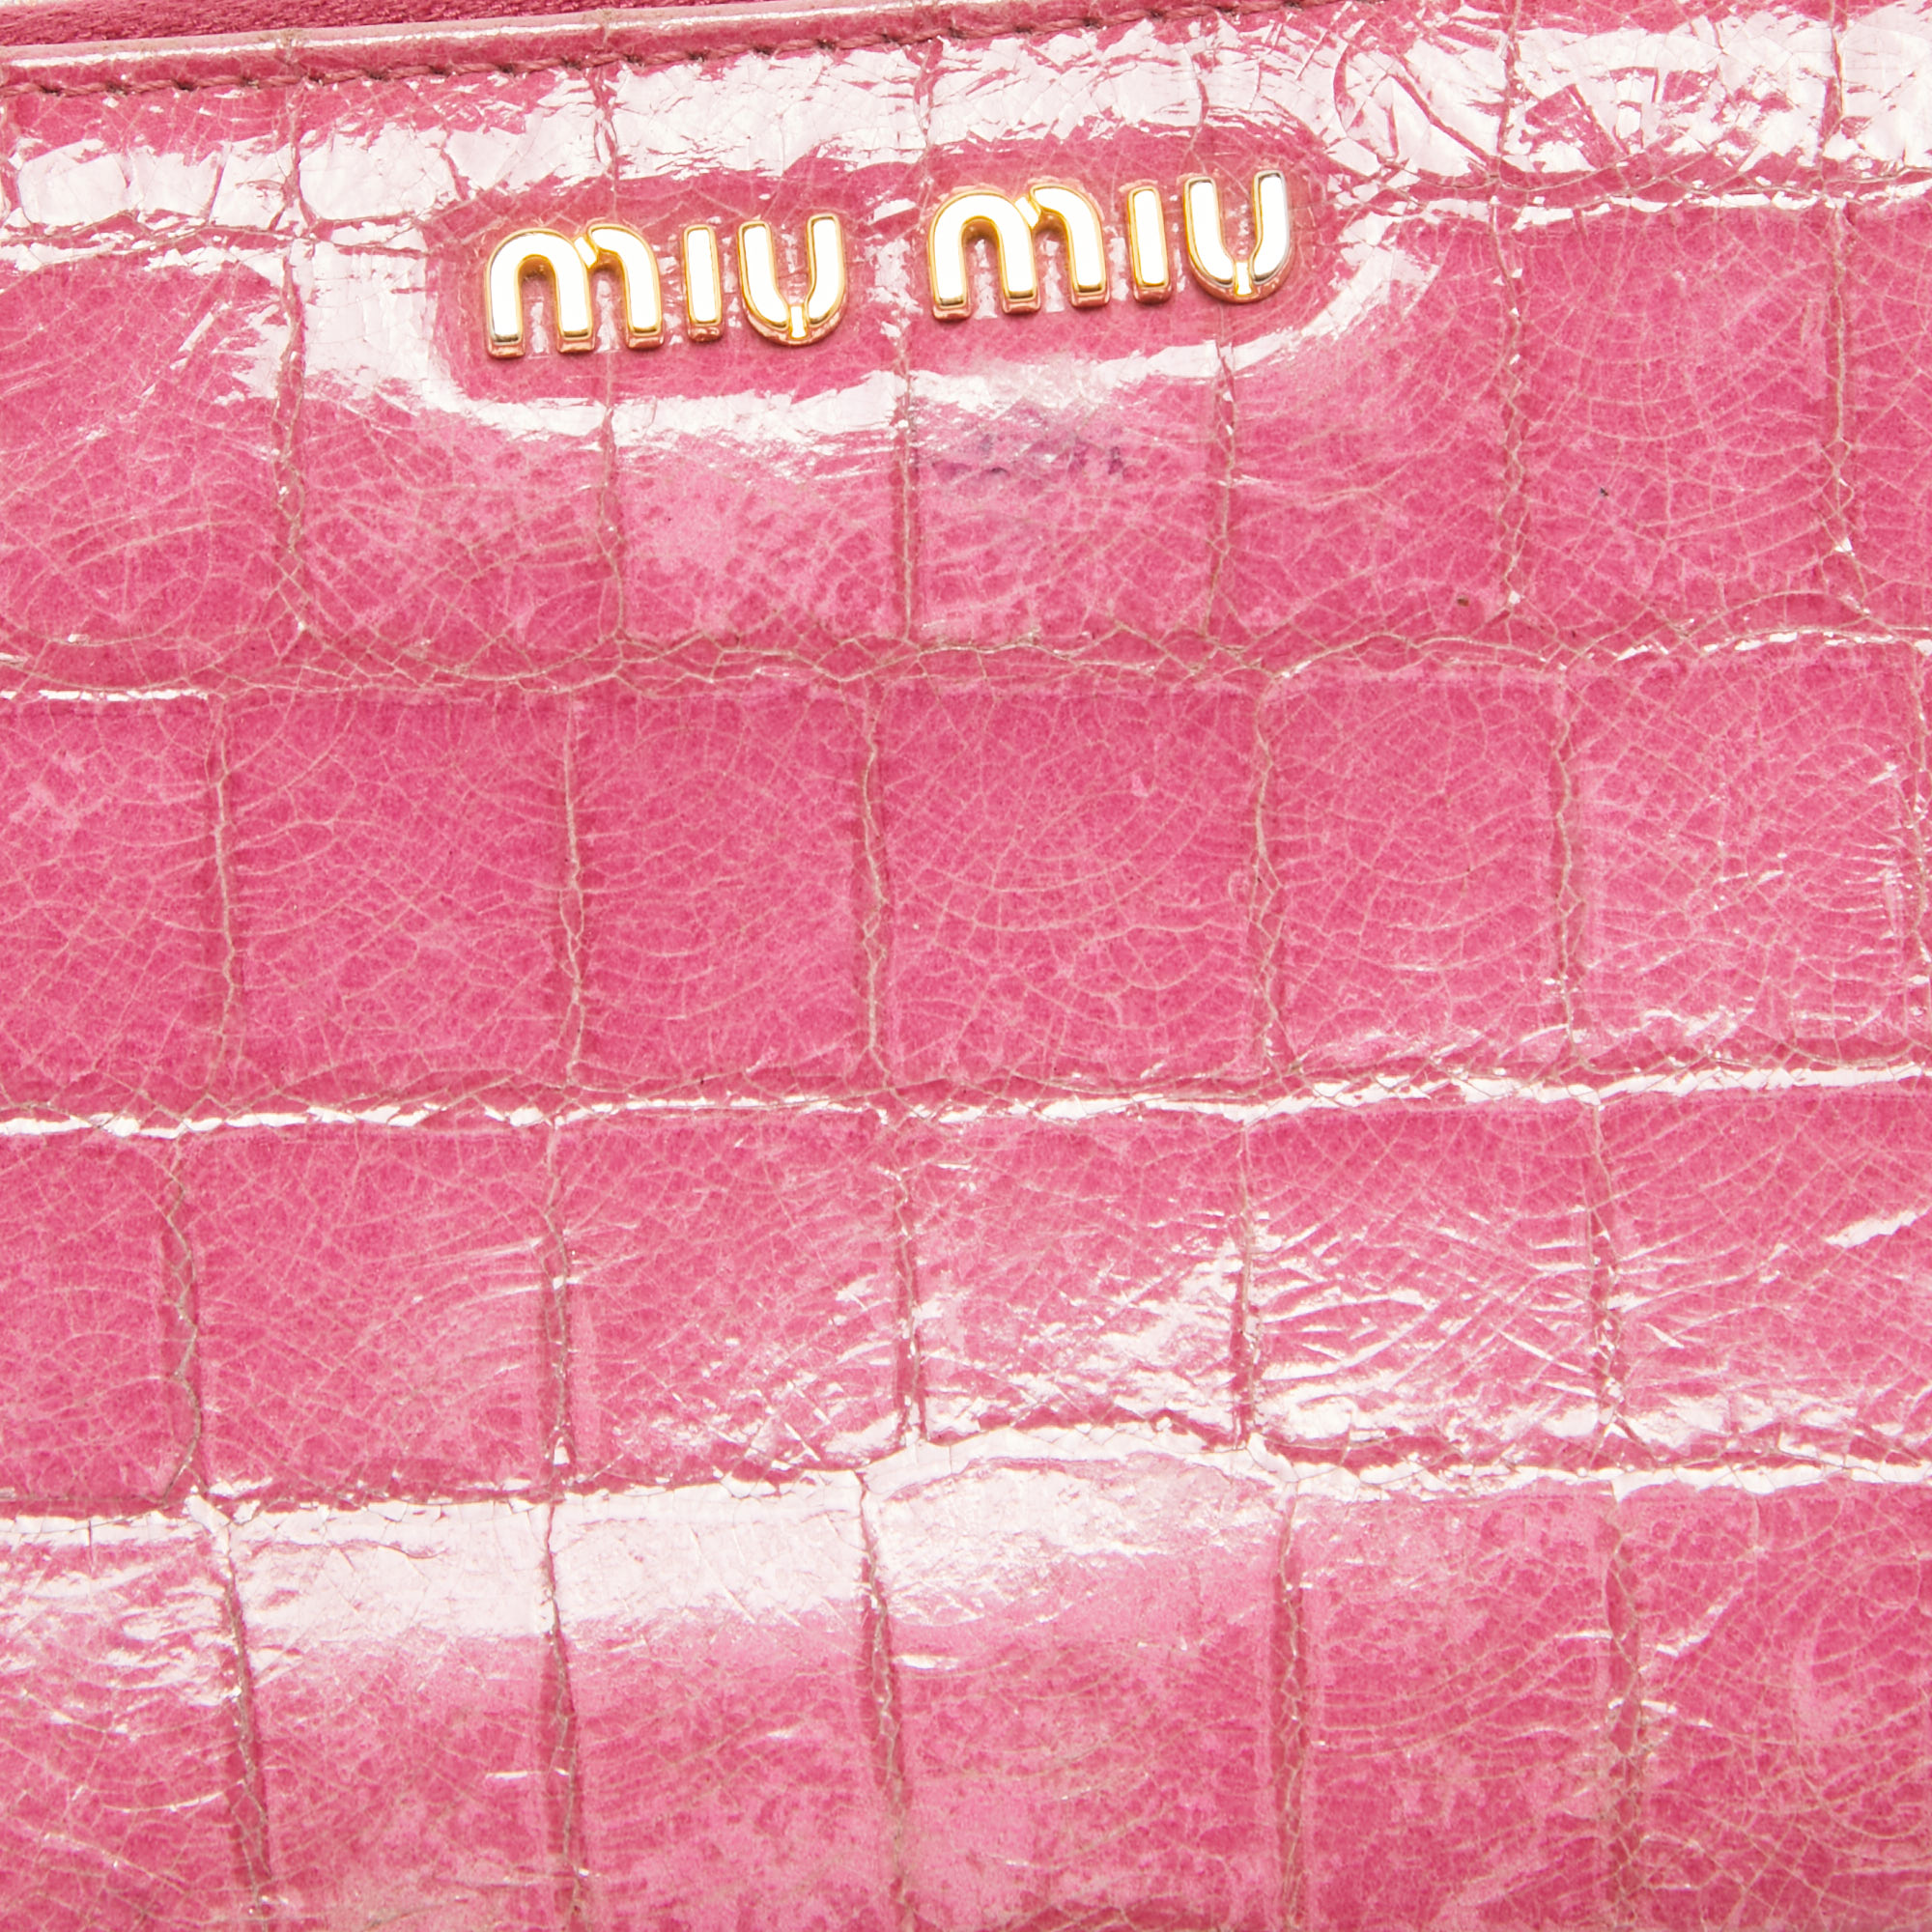 Miu Miu Pink Croc Effect Patent Leather Continental Zip Wallet